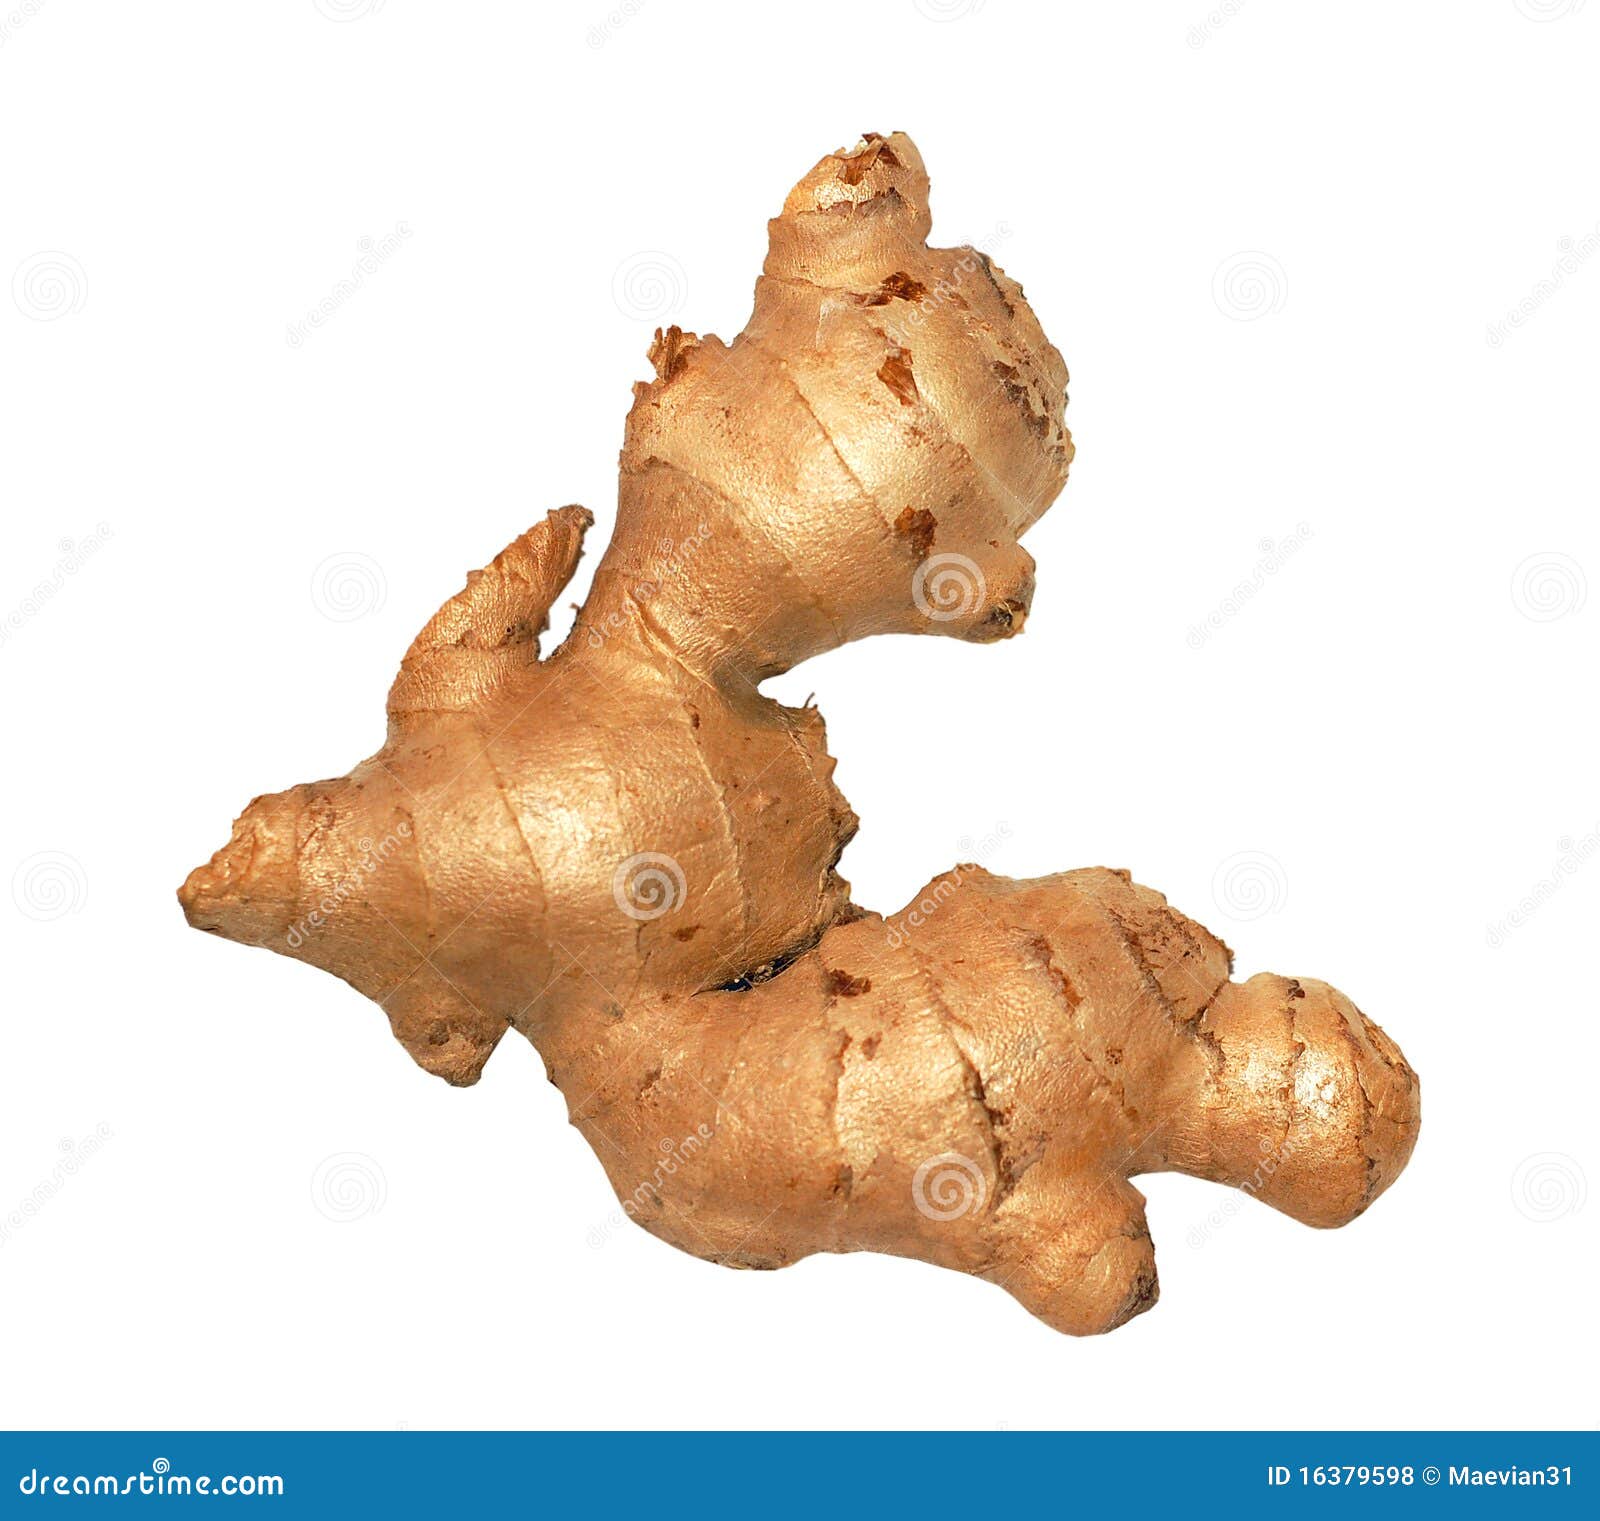 ginger root / rhizome